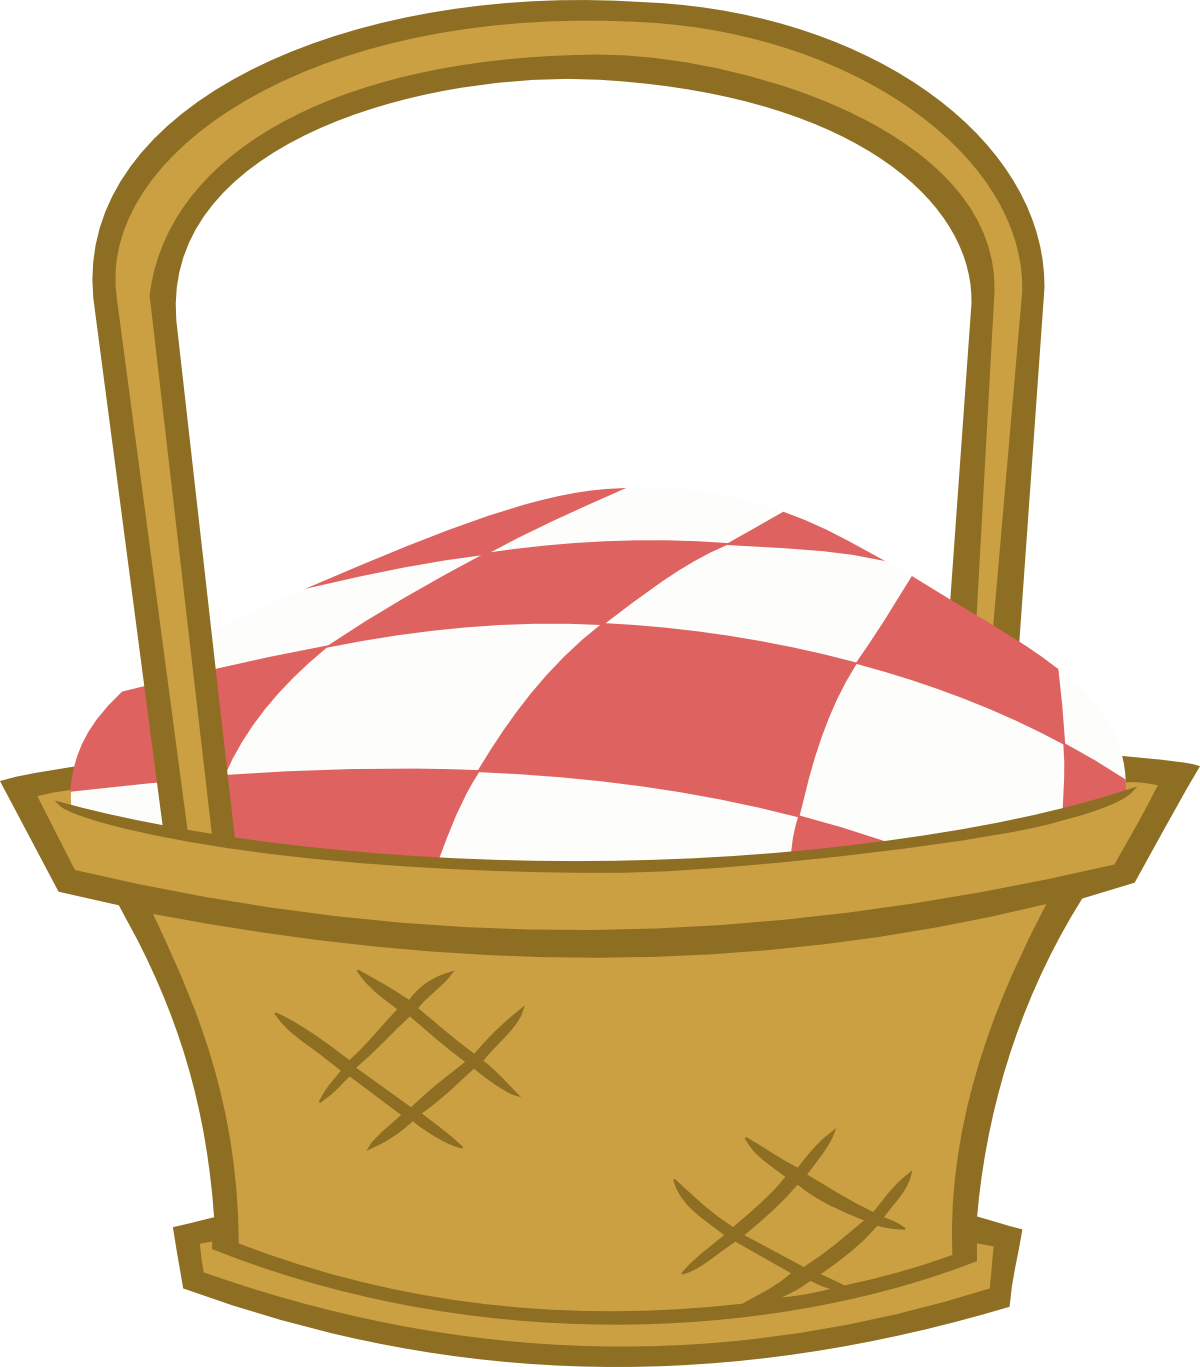 Images For > Cartoon Picnic Basket